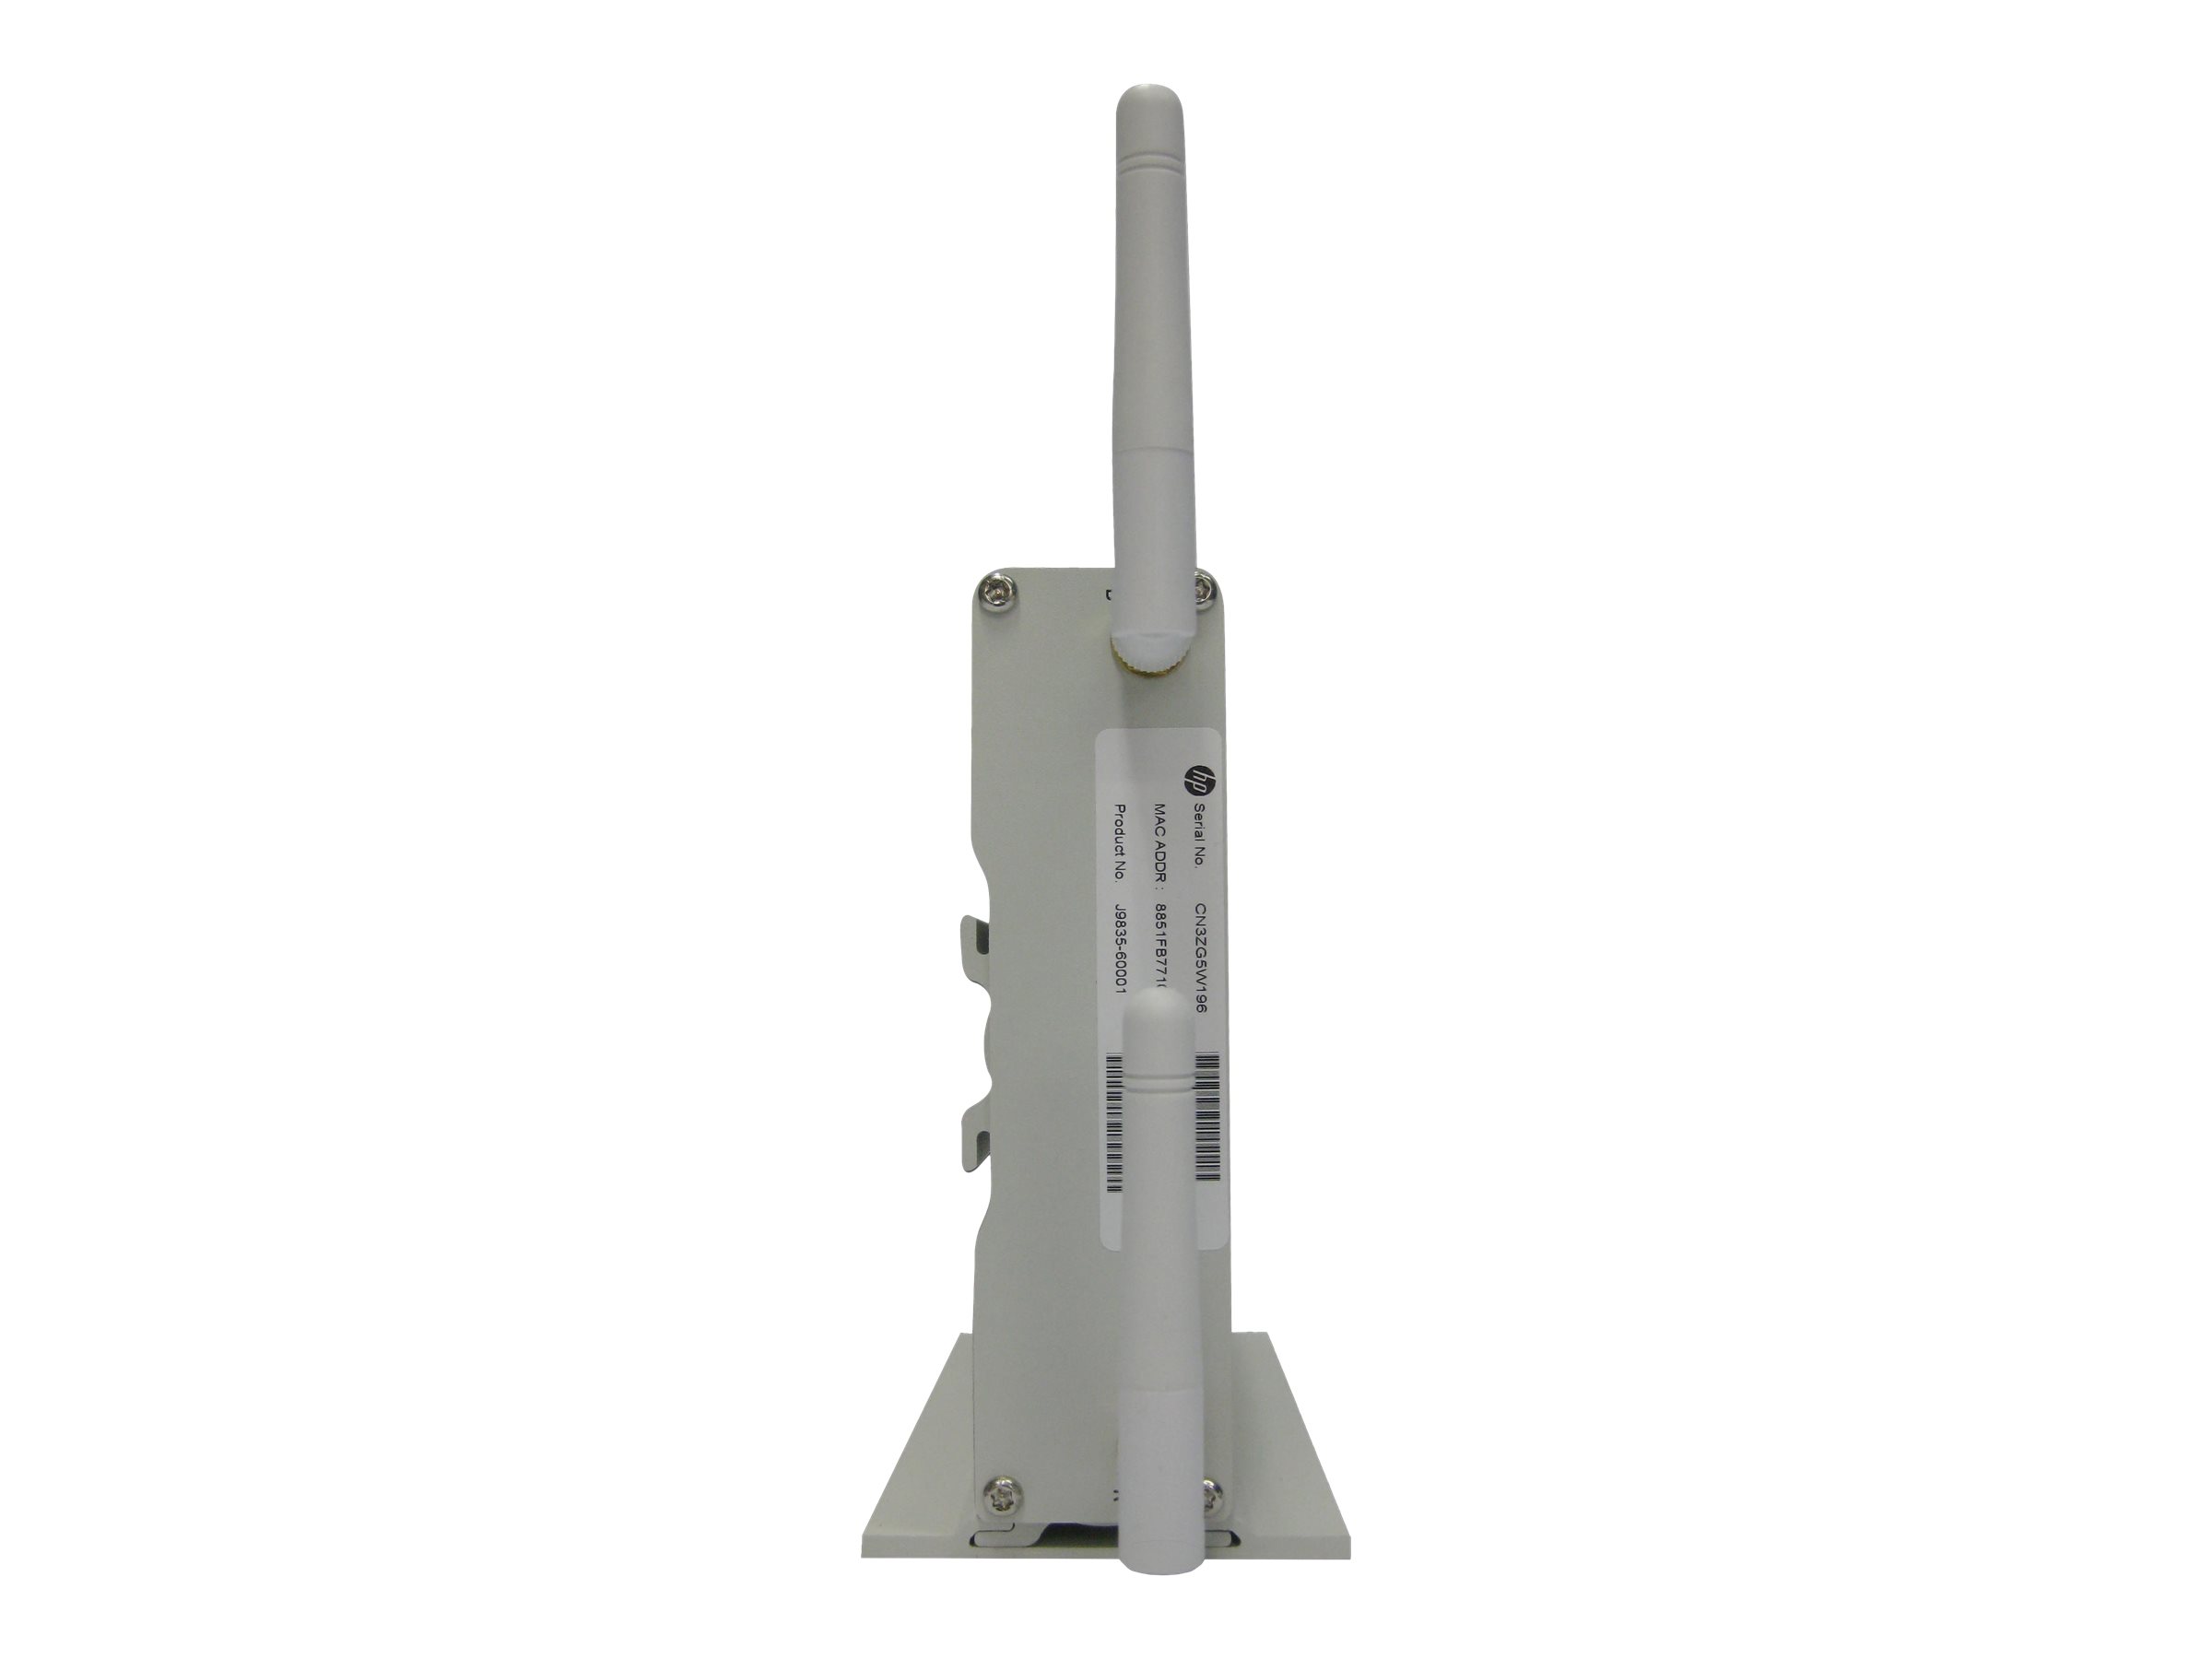 HPE 501 Wireless Client Bridge - Wireless Router - GigE - Wi-Fi 5 - Dual-Band - wandmontierbar